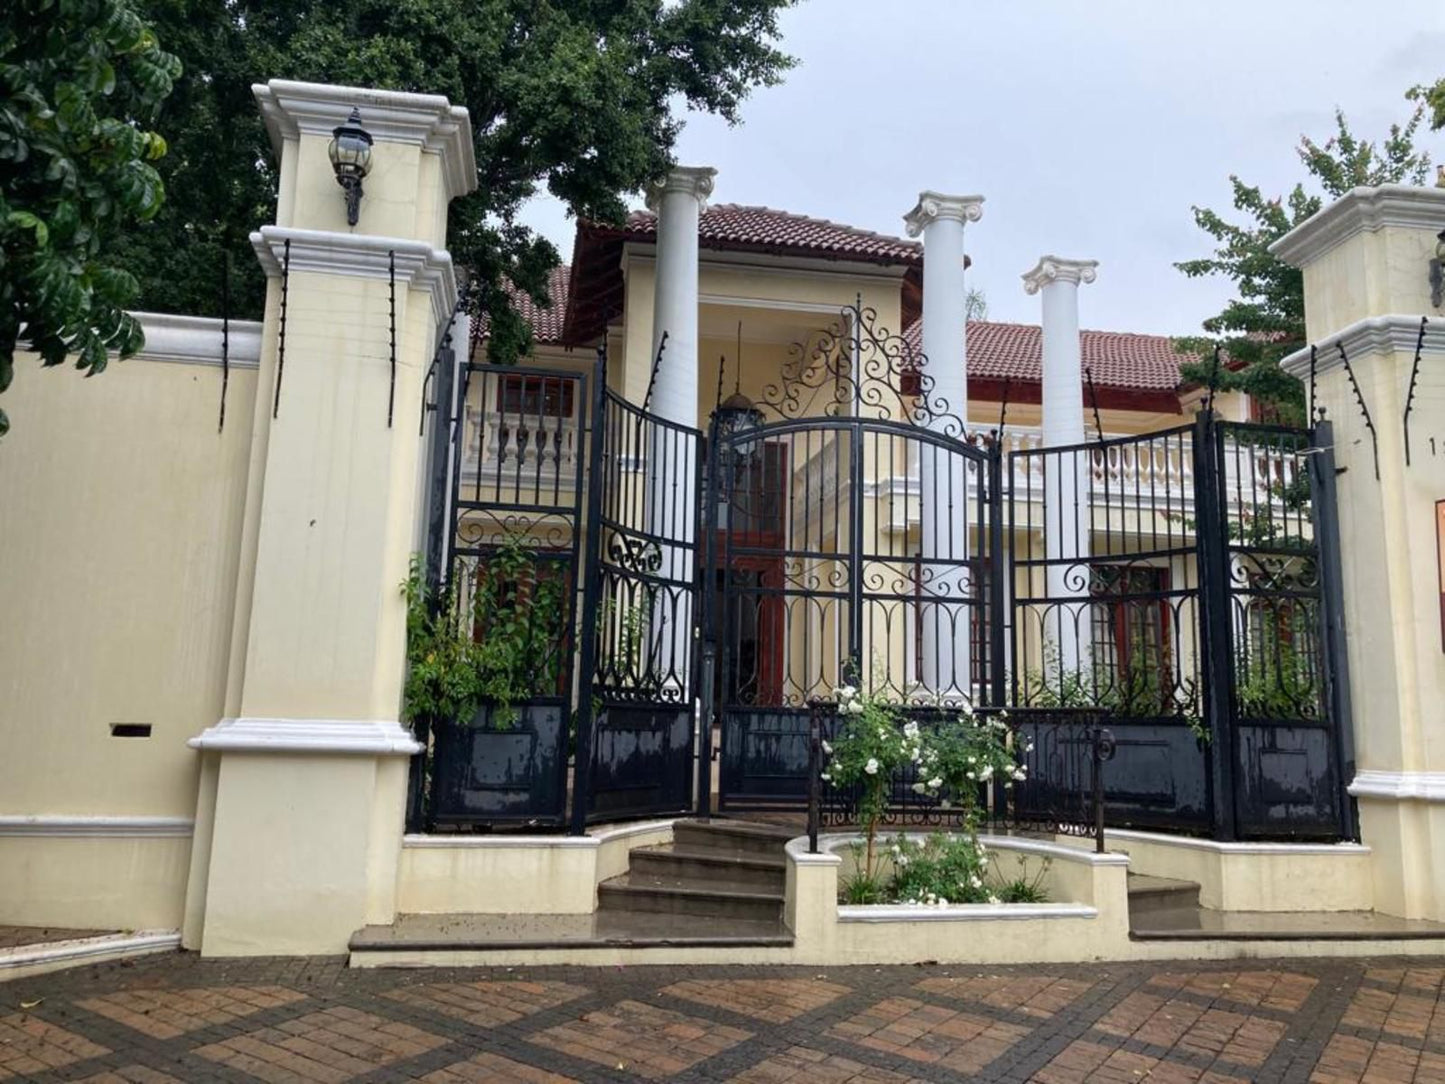 Cricklewood Manor Boutique Hotel Waterkloof Pretoria Tshwane Gauteng South Africa House, Building, Architecture